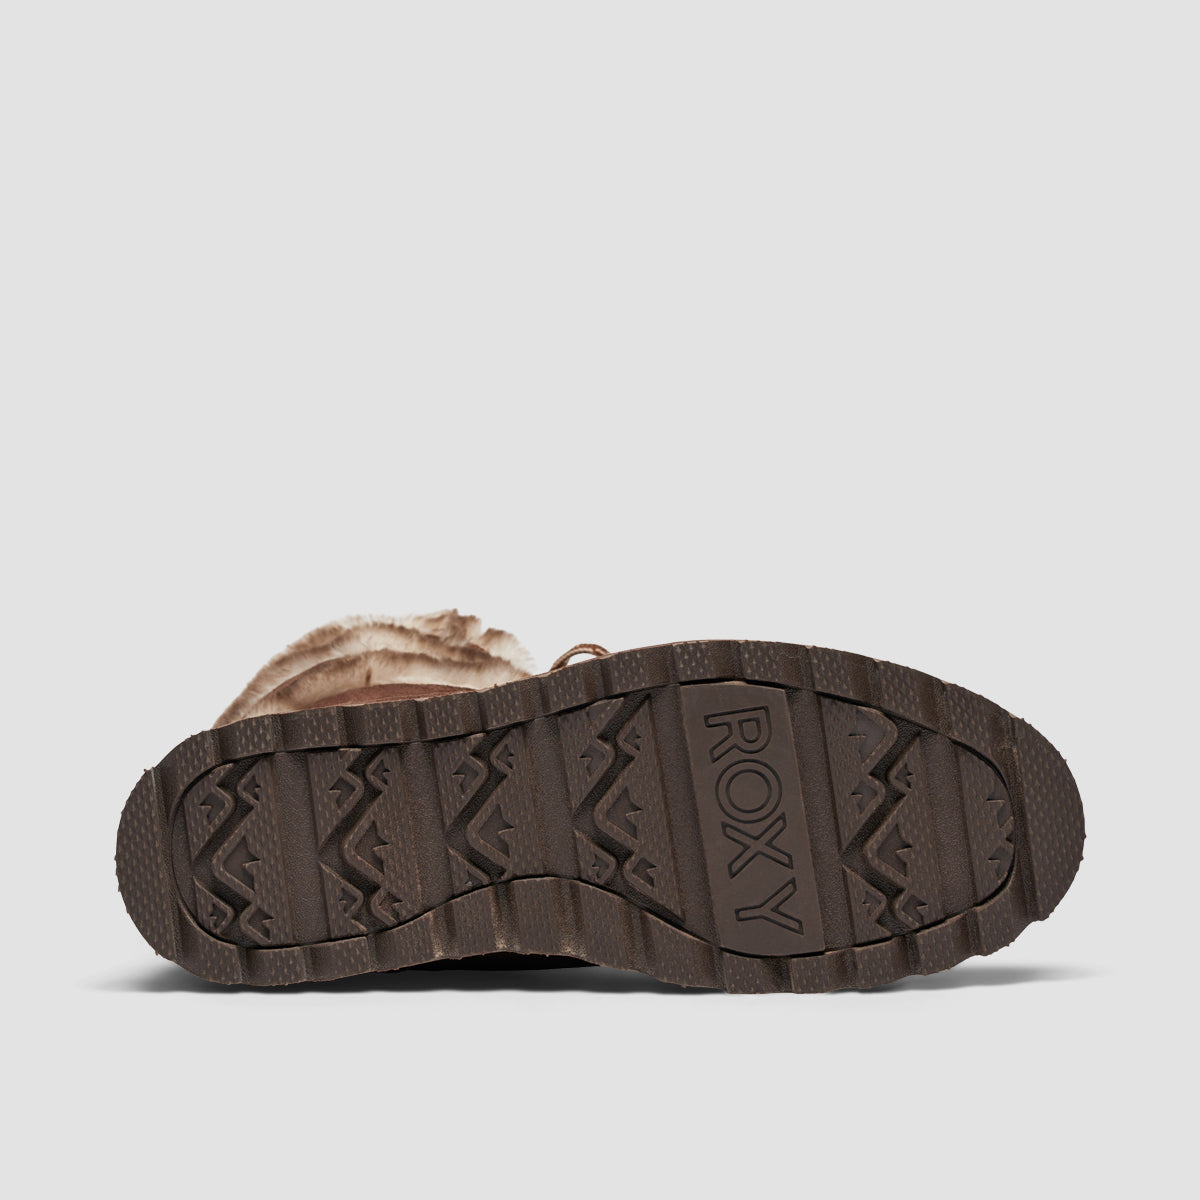 Roxy Brandi III Boots Chocolate - Womens